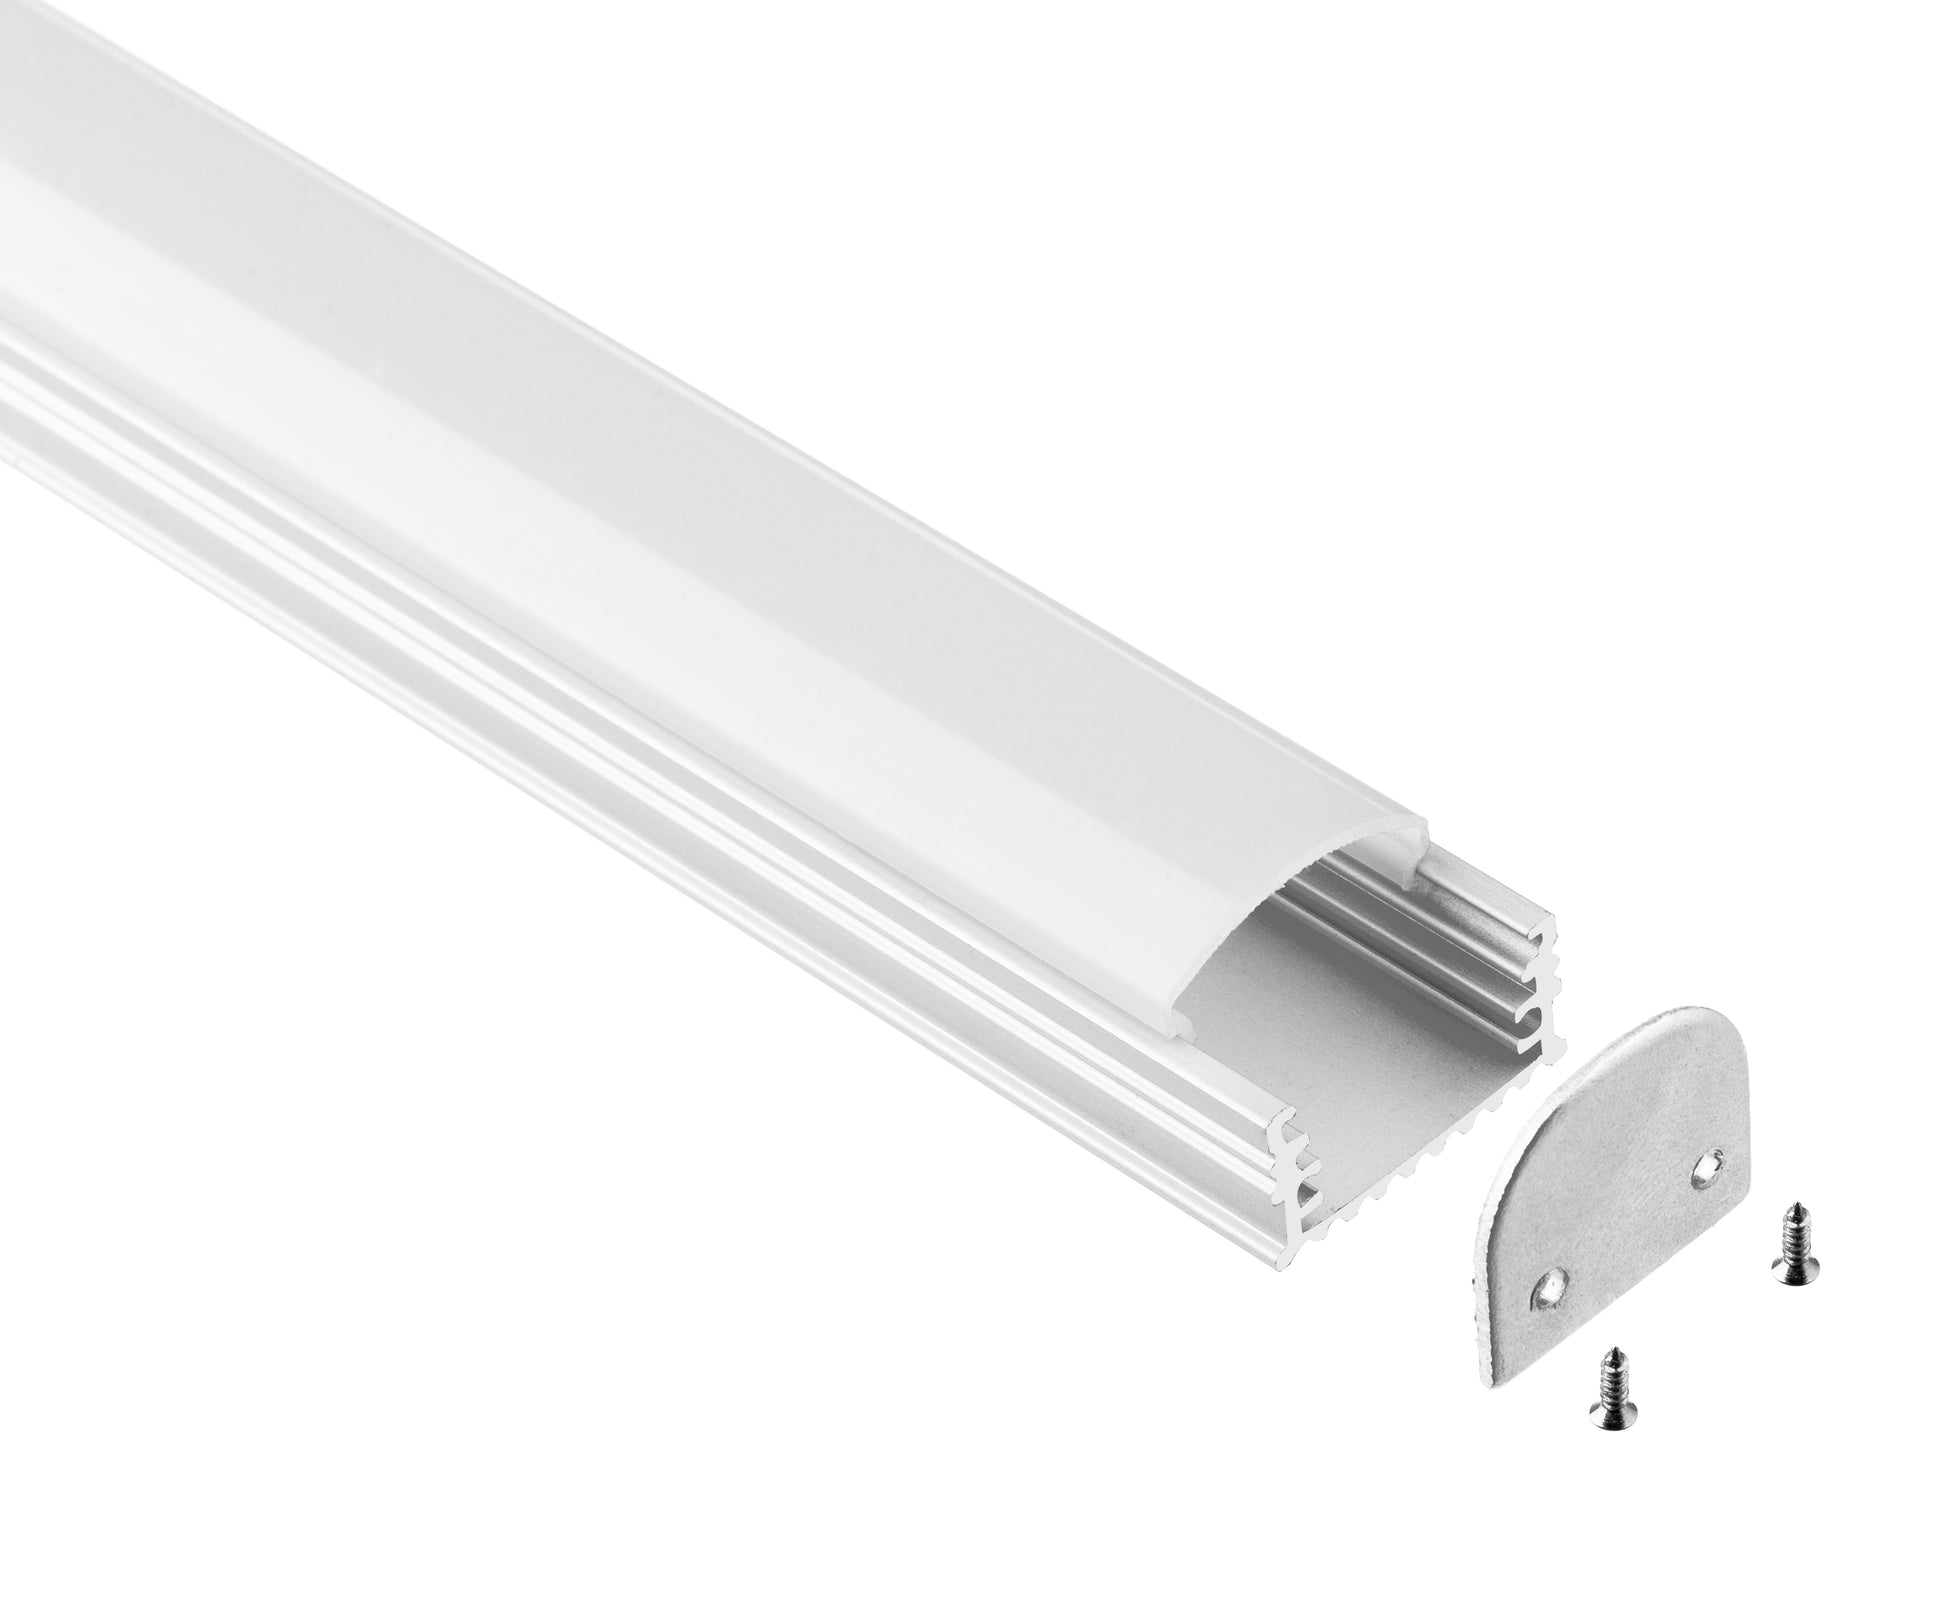 LED Profile Large HousingAluminum Arc Cover, Aluminum Channel for Strip Lights Best for 12V, 24 and 110V Strip light